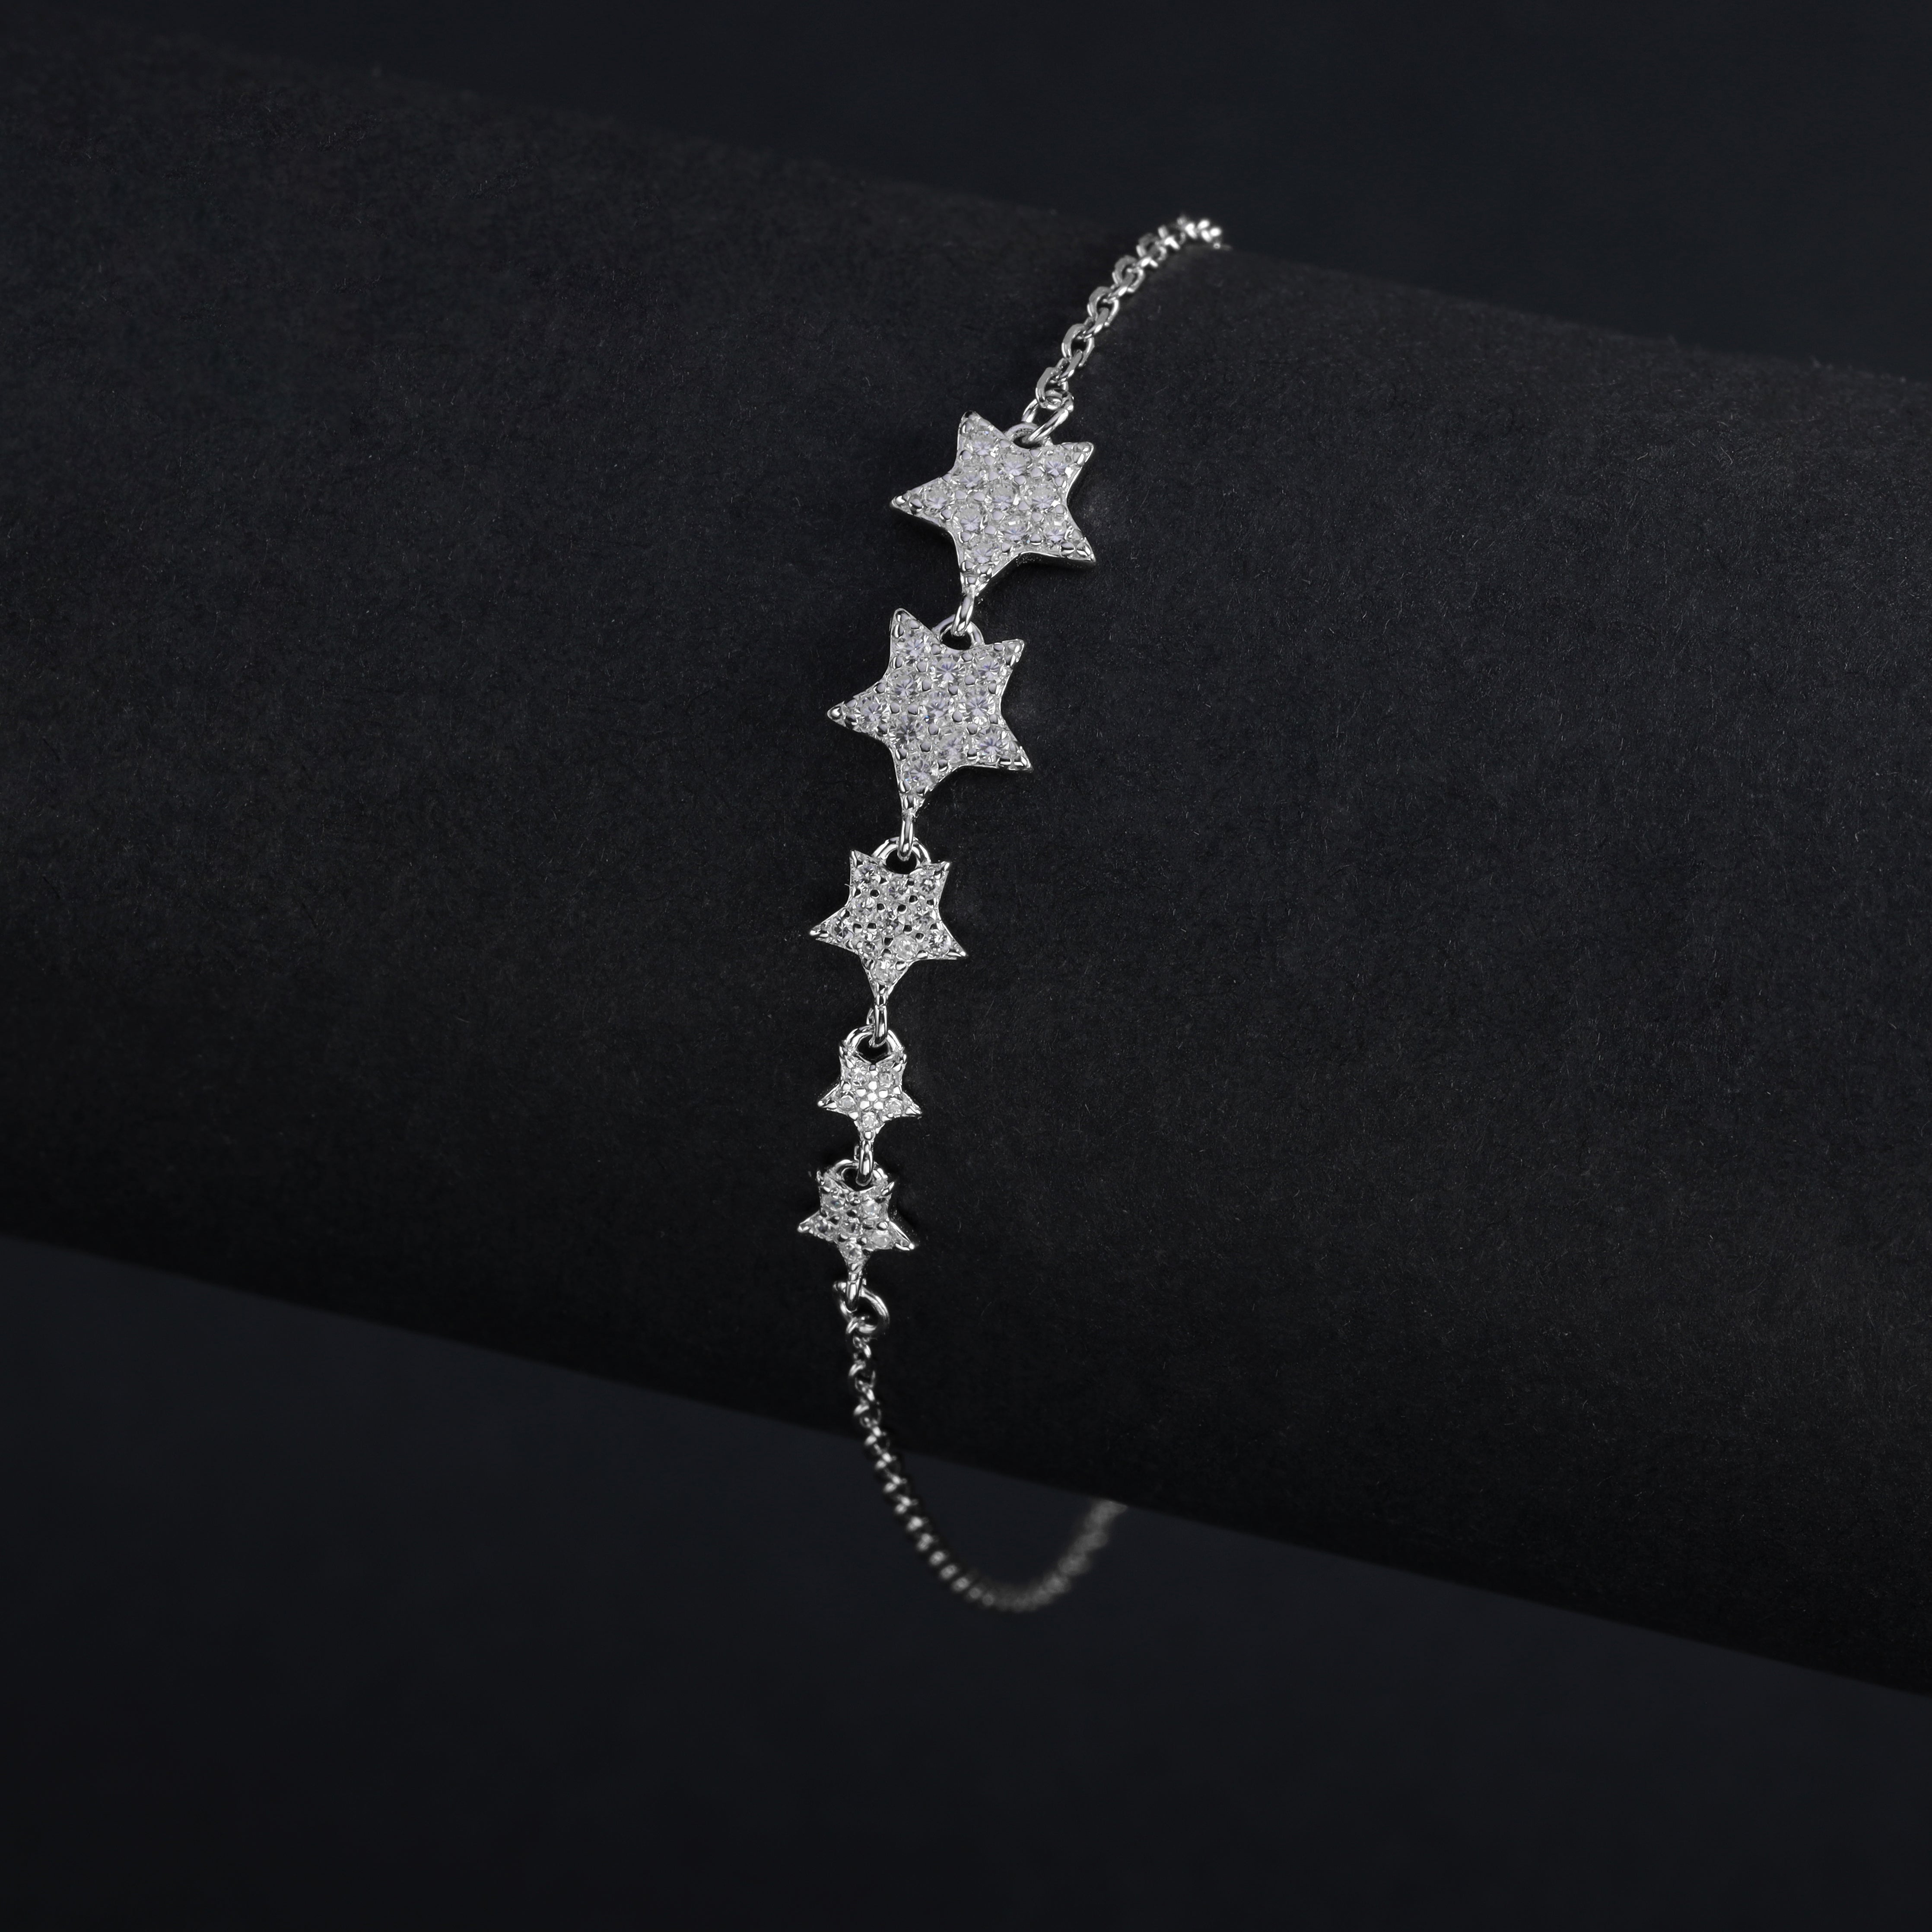 Damen Ankerkette Armband mit Zirkonia Sterne Motiv - aus 925 Sterlingsilber - Taipan Schmuck